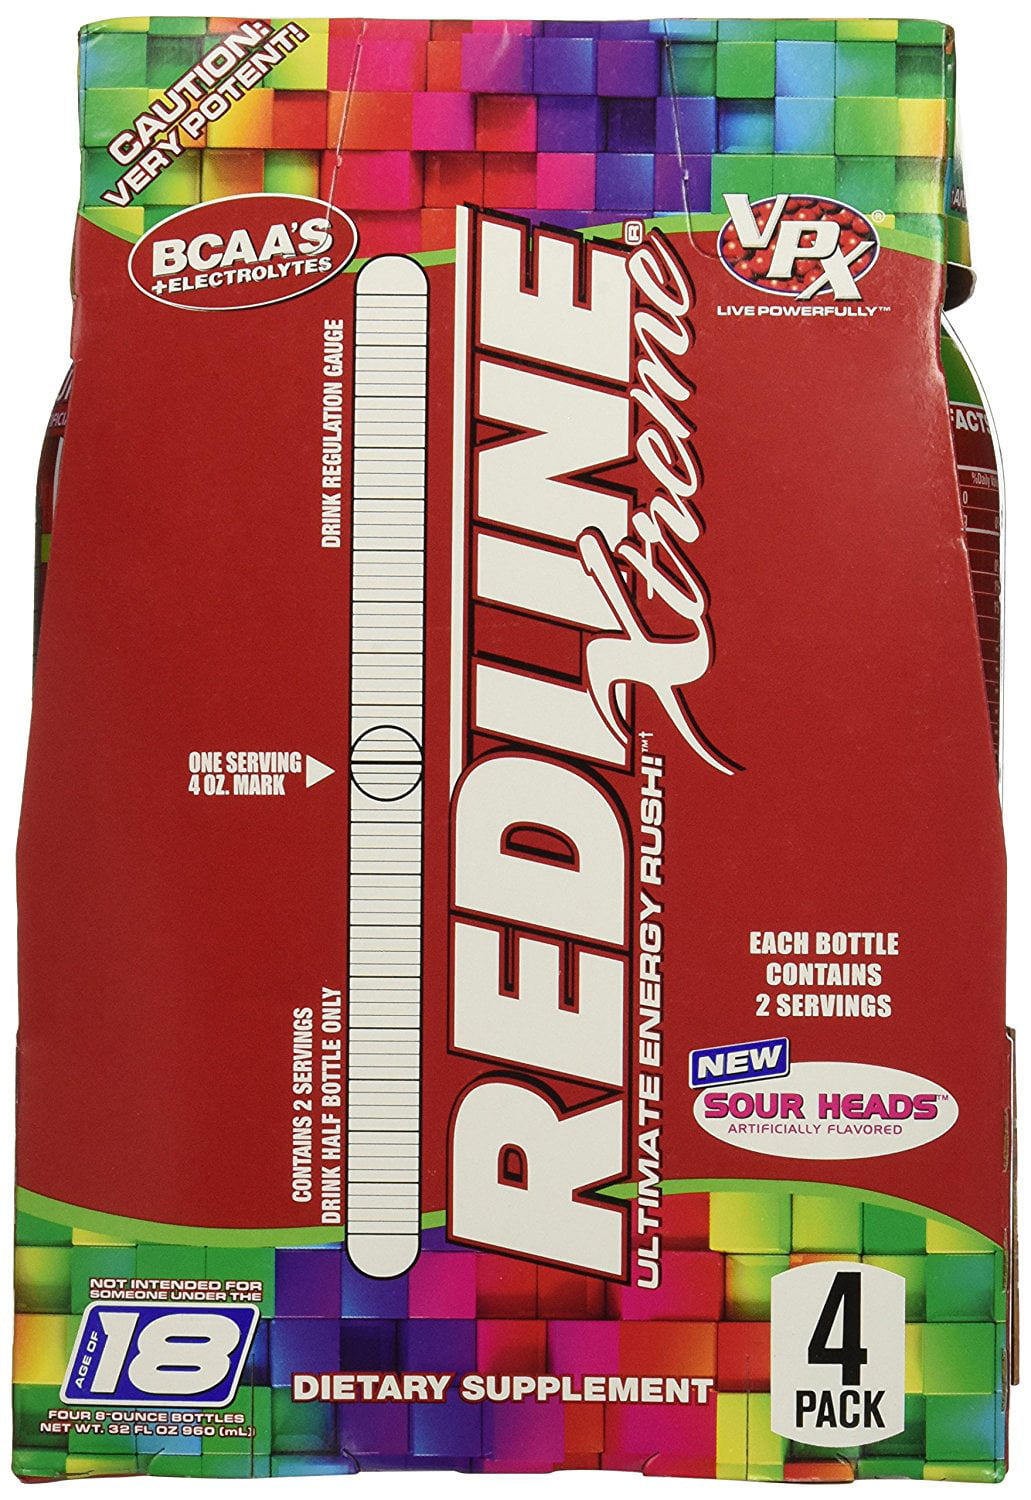 original redline energy drink